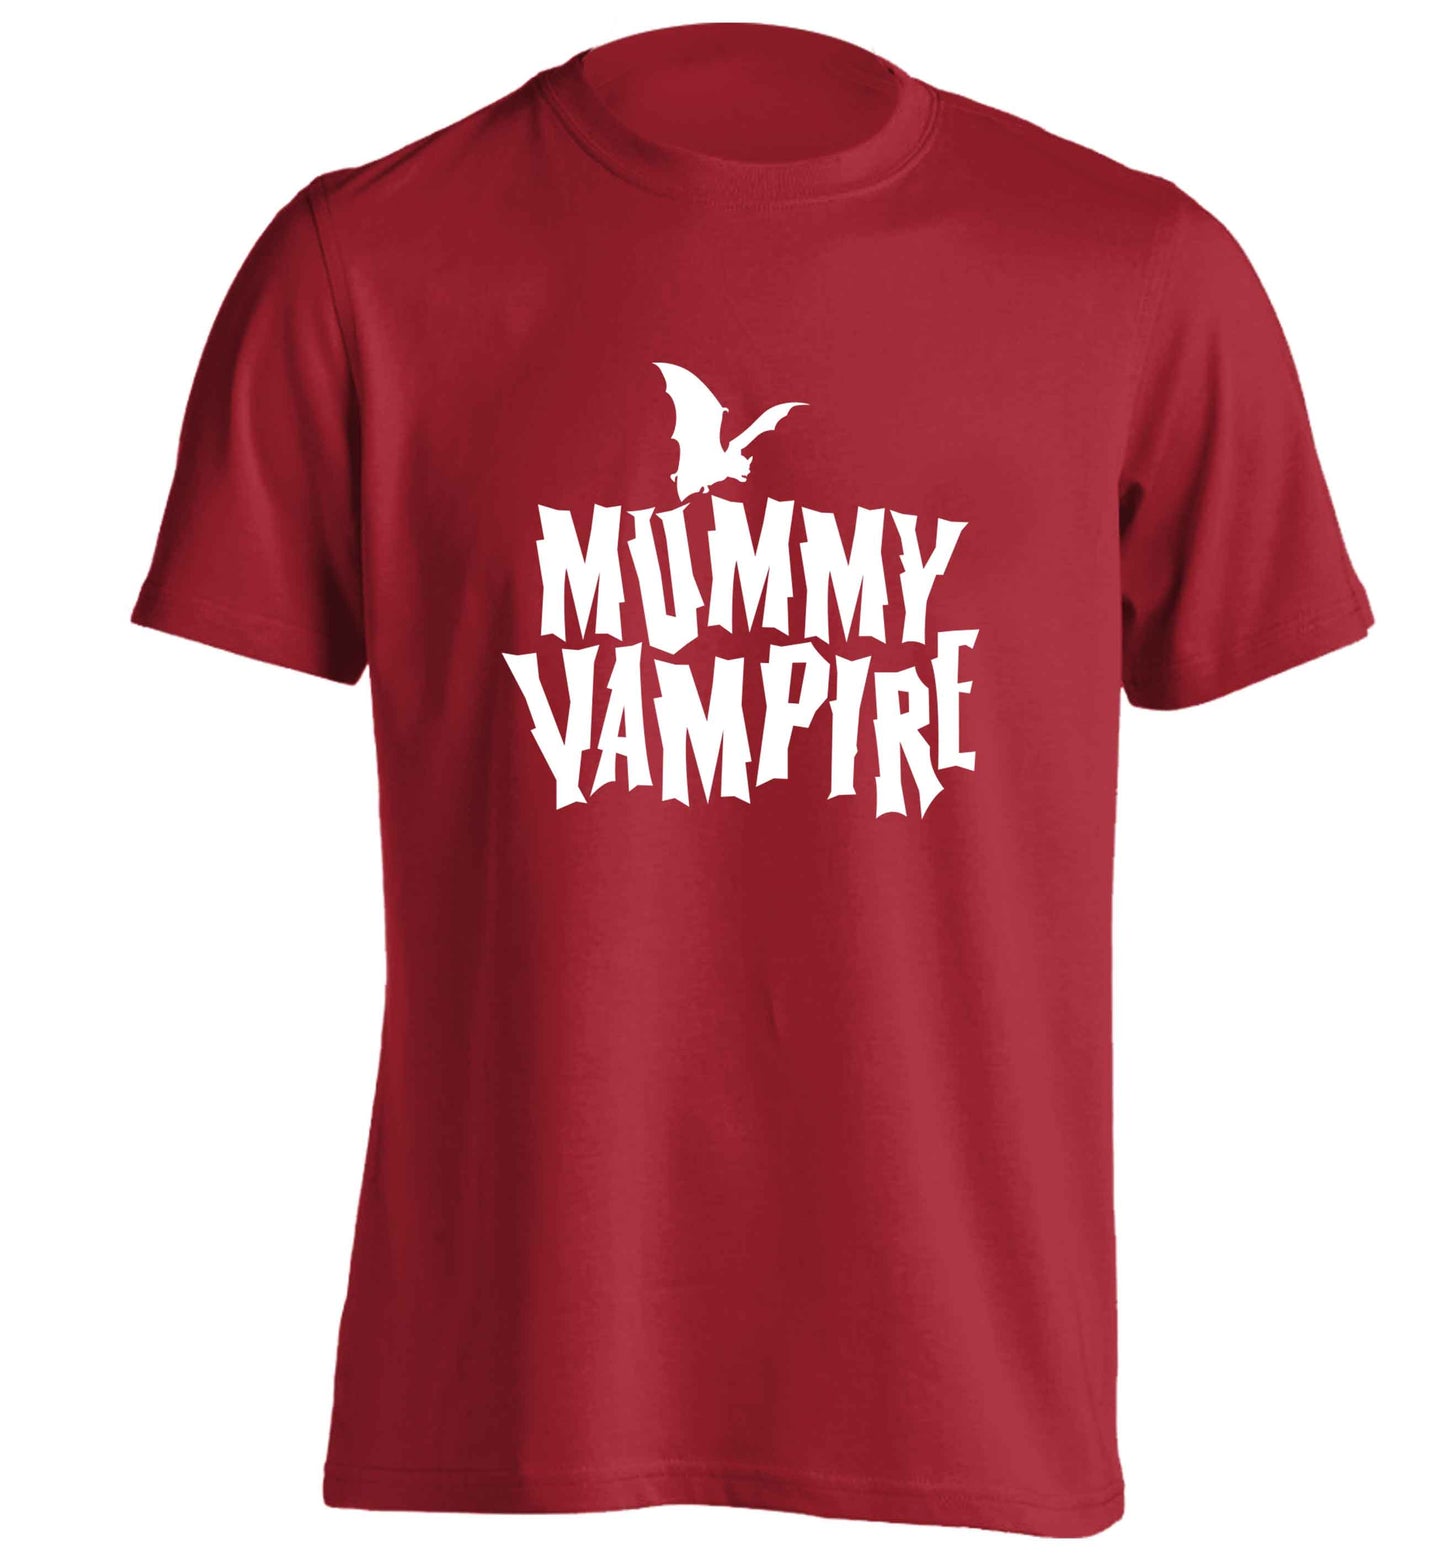 Mummy vampire adults unisex red Tshirt 2XL